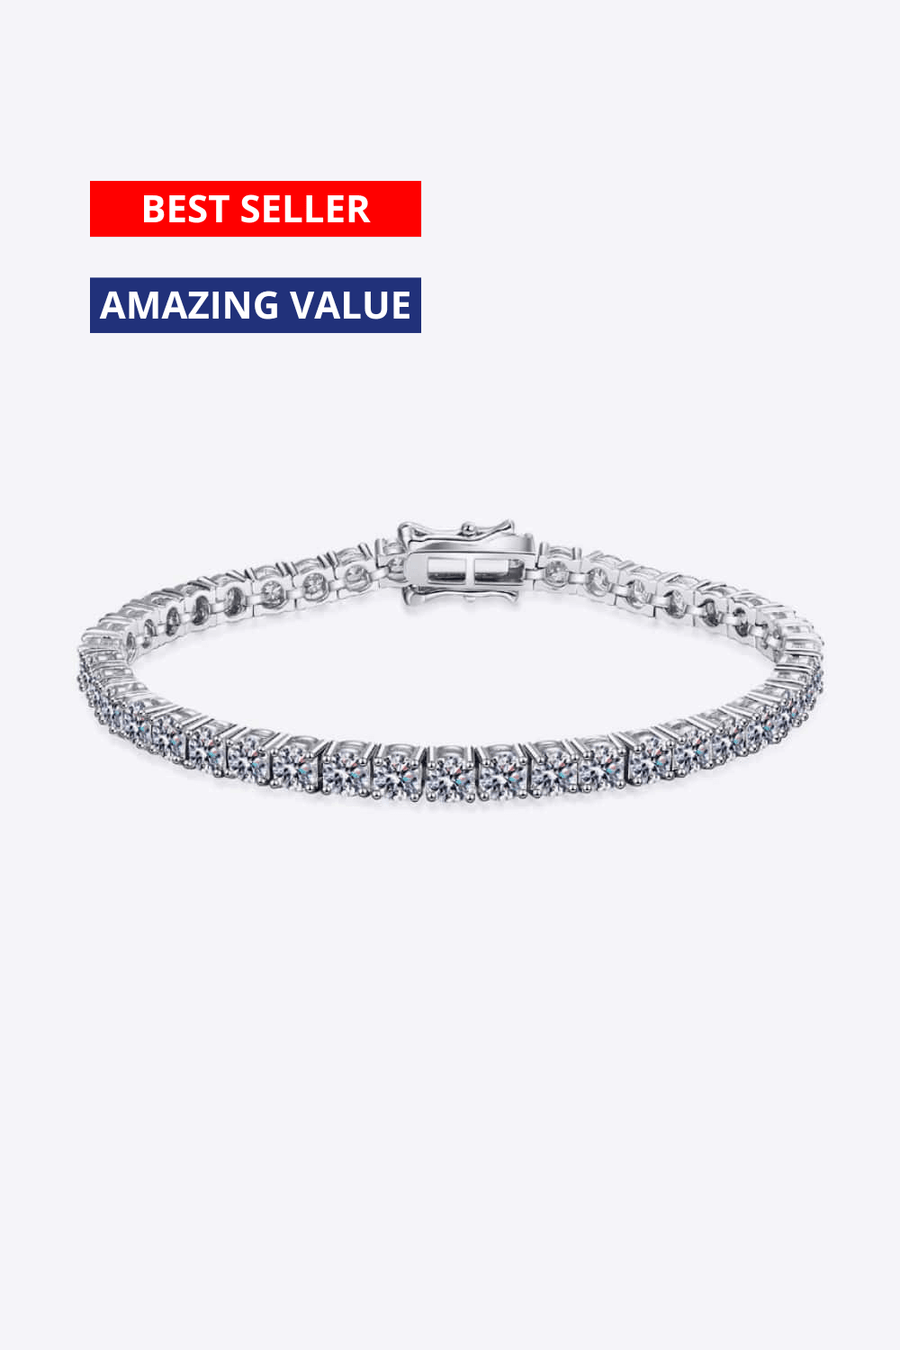 1# BEST Diamond Tennis Chain Bracelet Jewelry Gifts for Women | #1 Best Most Top Trendy Trending 4.9 Carat Diamond Bracelet Gift for Women, Ladies, Mother | MASON New York